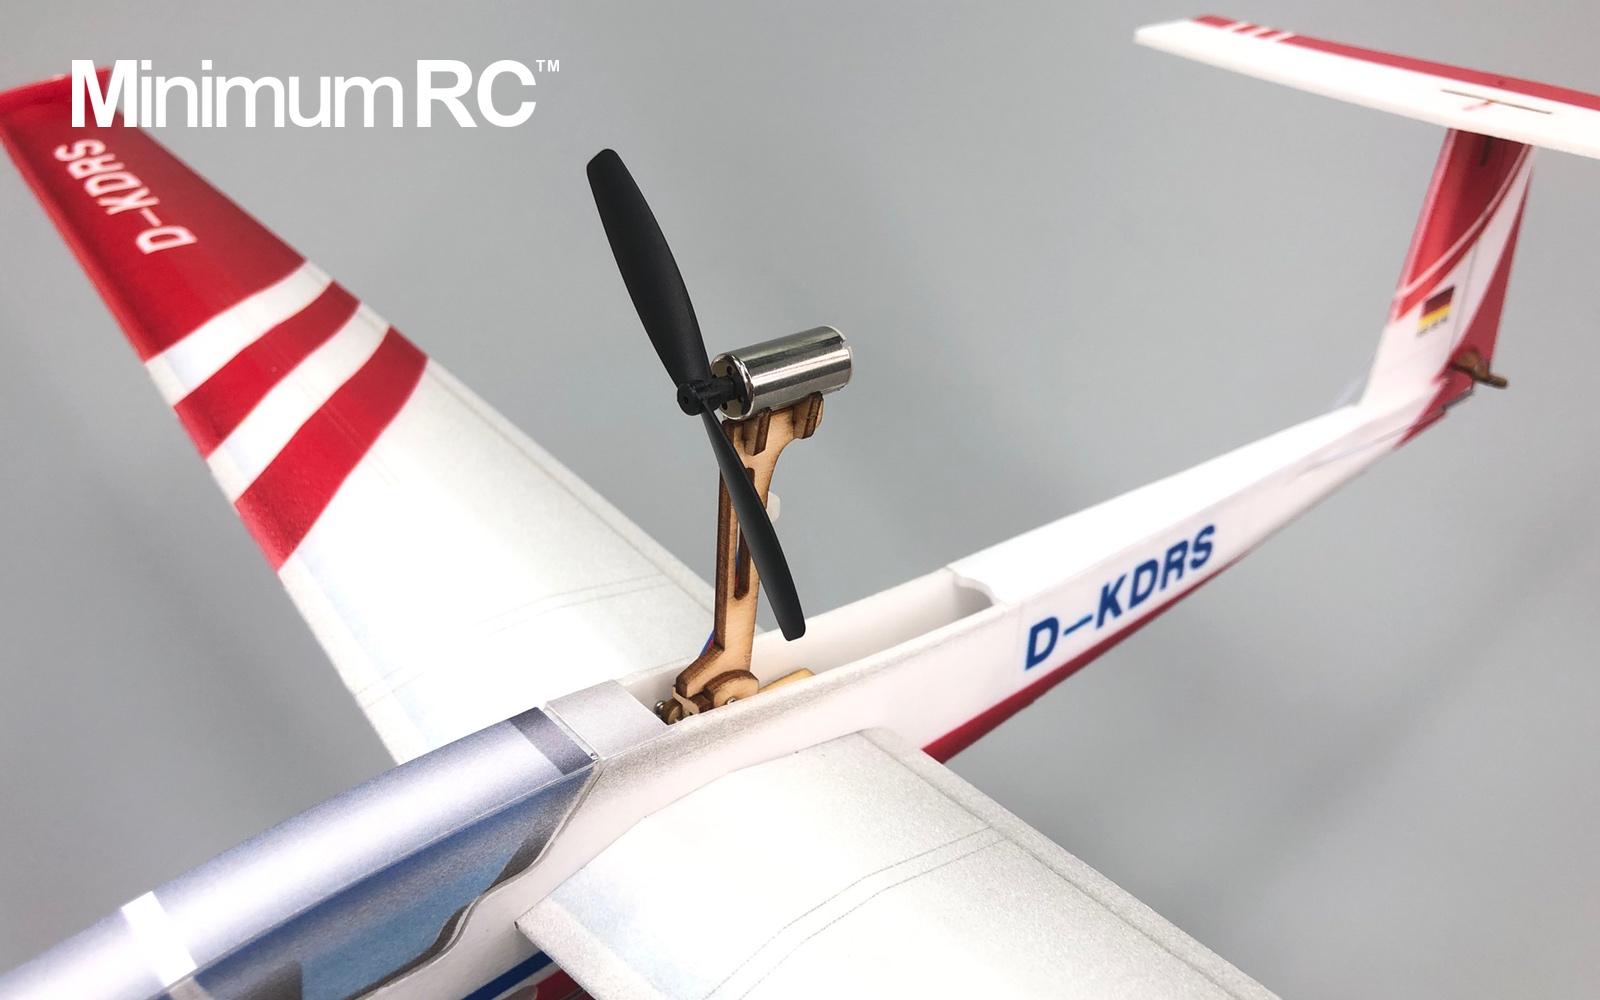 Minimum Rc Glider: Key Factors for Designing a Successful Minimum RC Glider